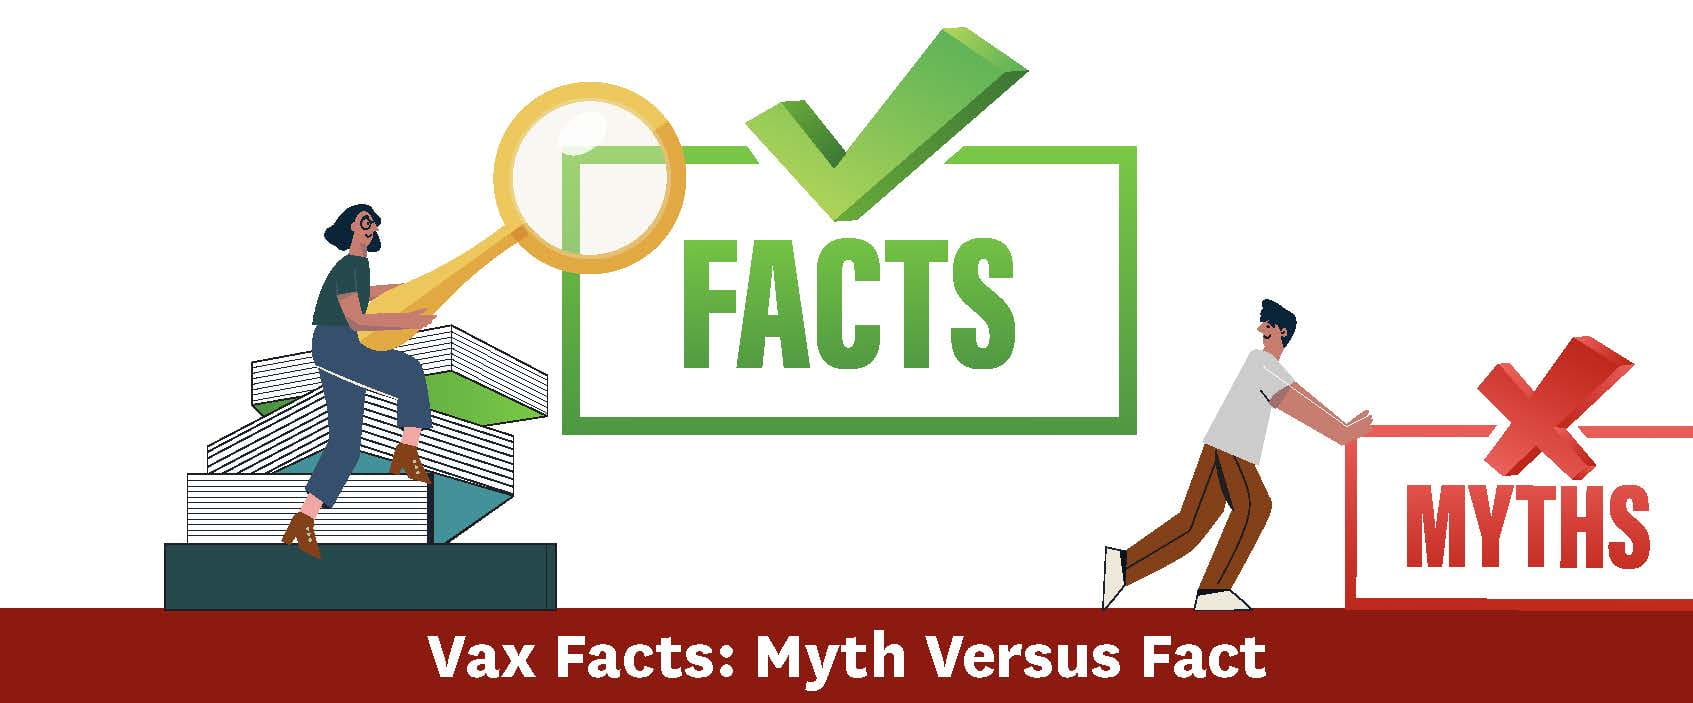 Myth Versus Fact Illustration